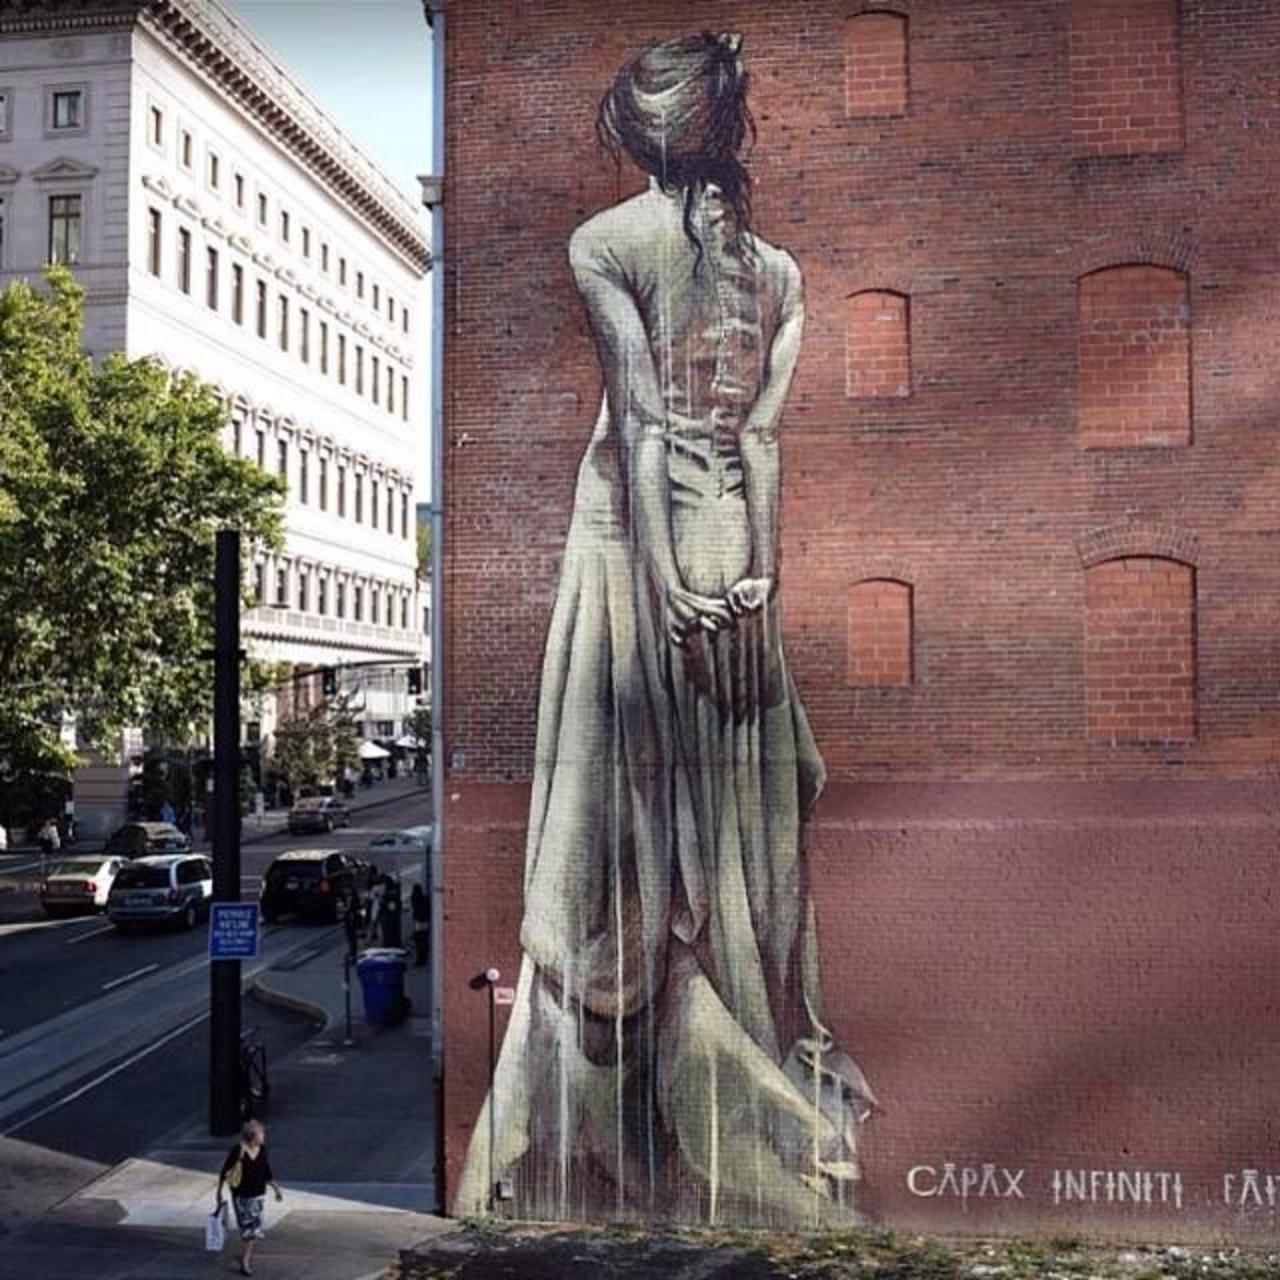 Artist @faithfourseven new huge Street Art mural 'Capax Infiniti' in Portland #art #mural #graffiti #streetart http://t.co/9aEGFXBUiZ